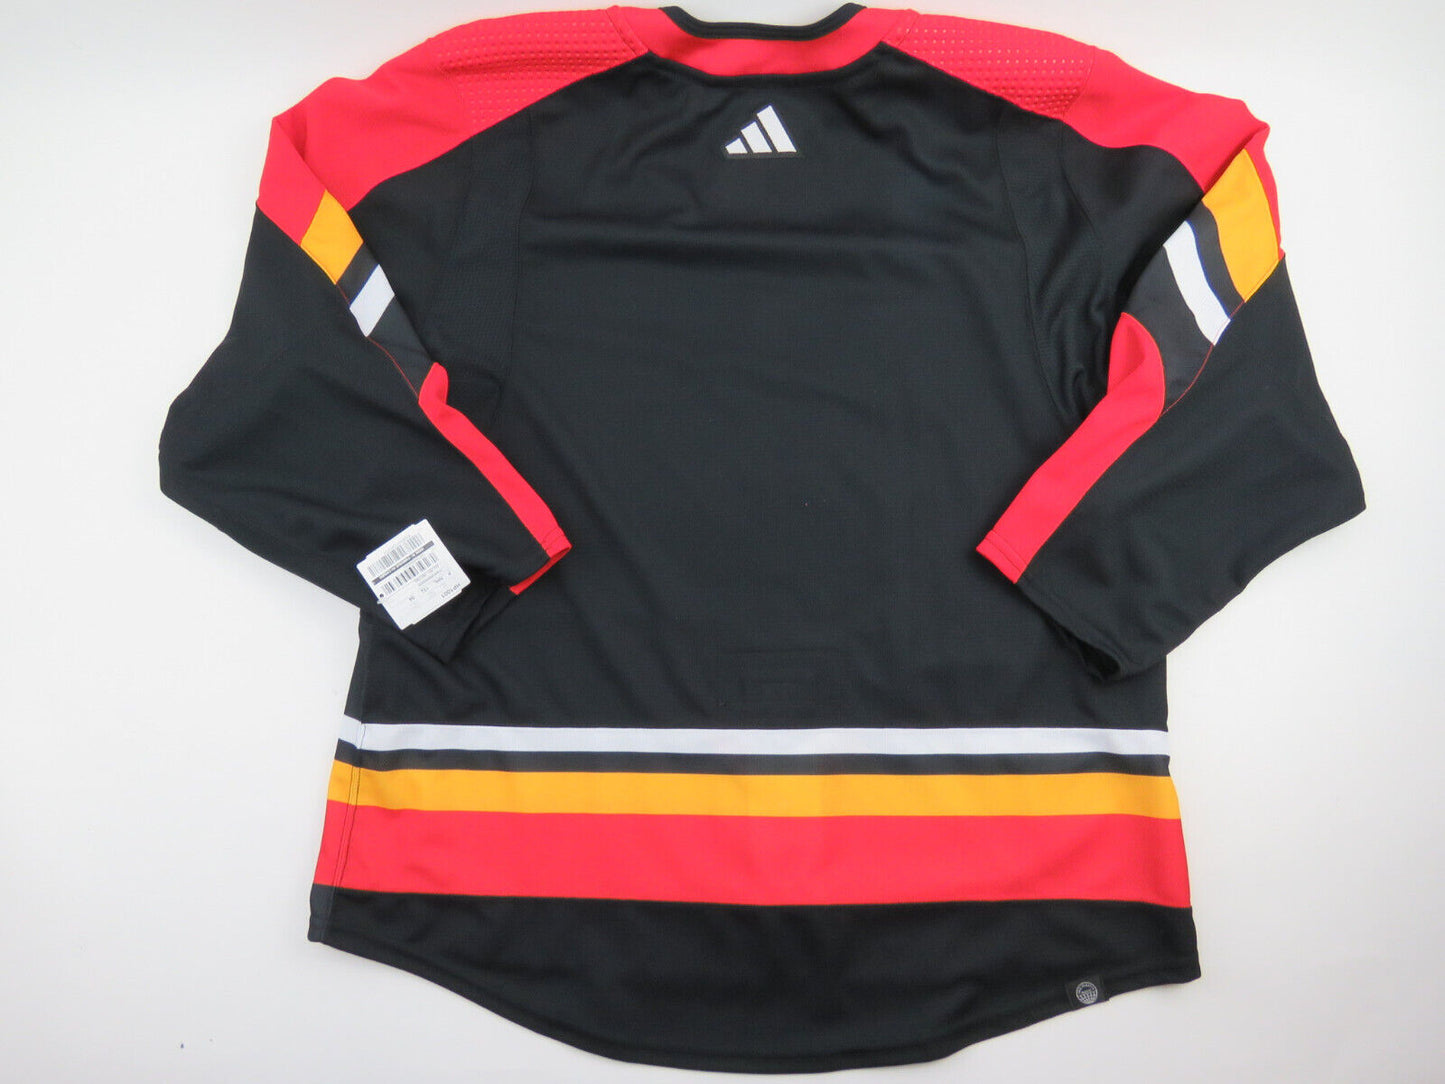 Calgary Flames Reverse Retro 2.0 Team Issued NHL Pro Stock Hockey Jersey 54 MiC